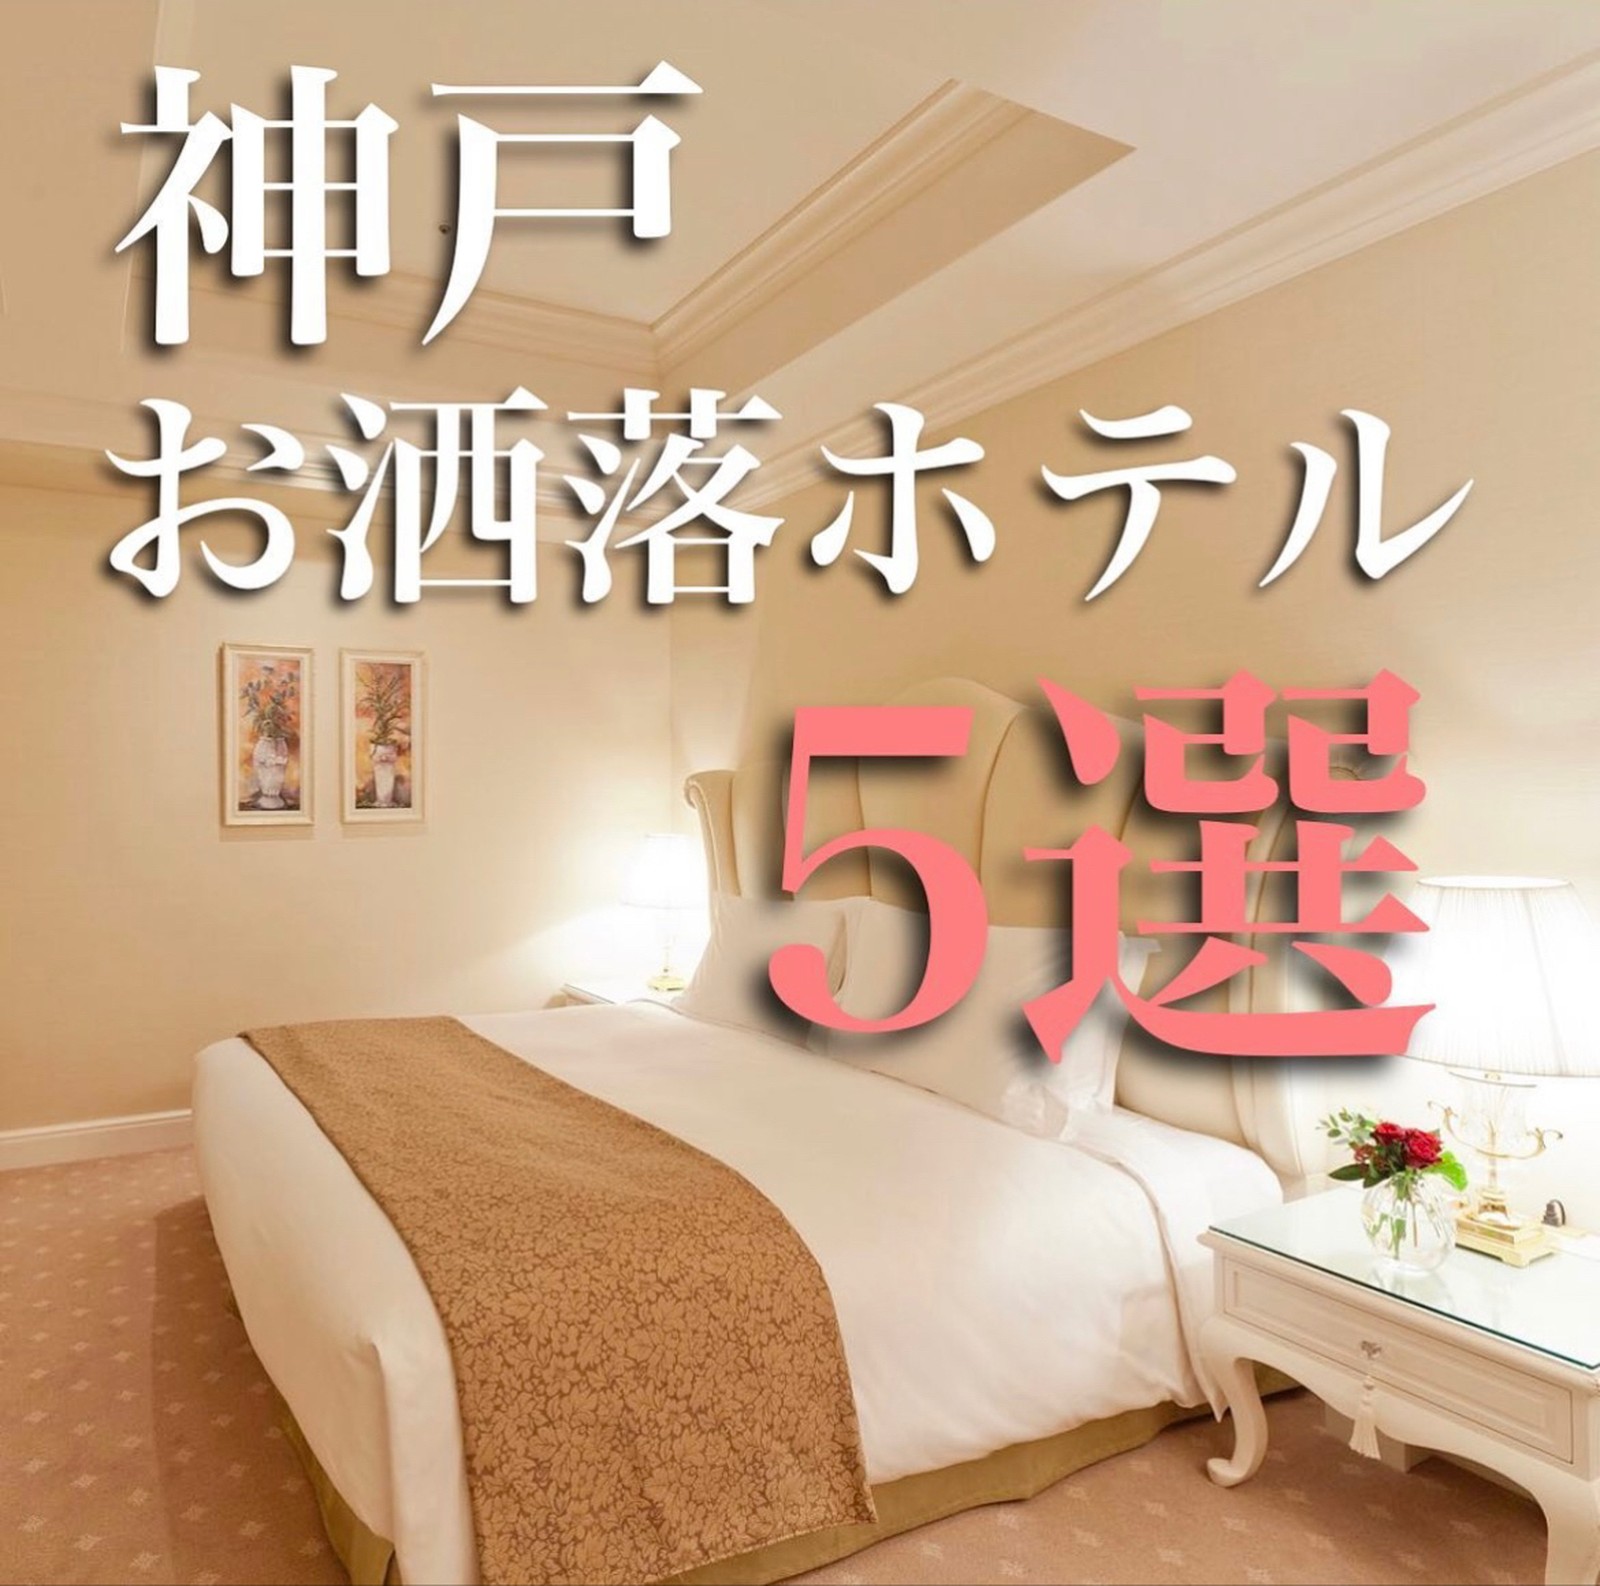 Lemon8 Story 神戸ホテル 安い